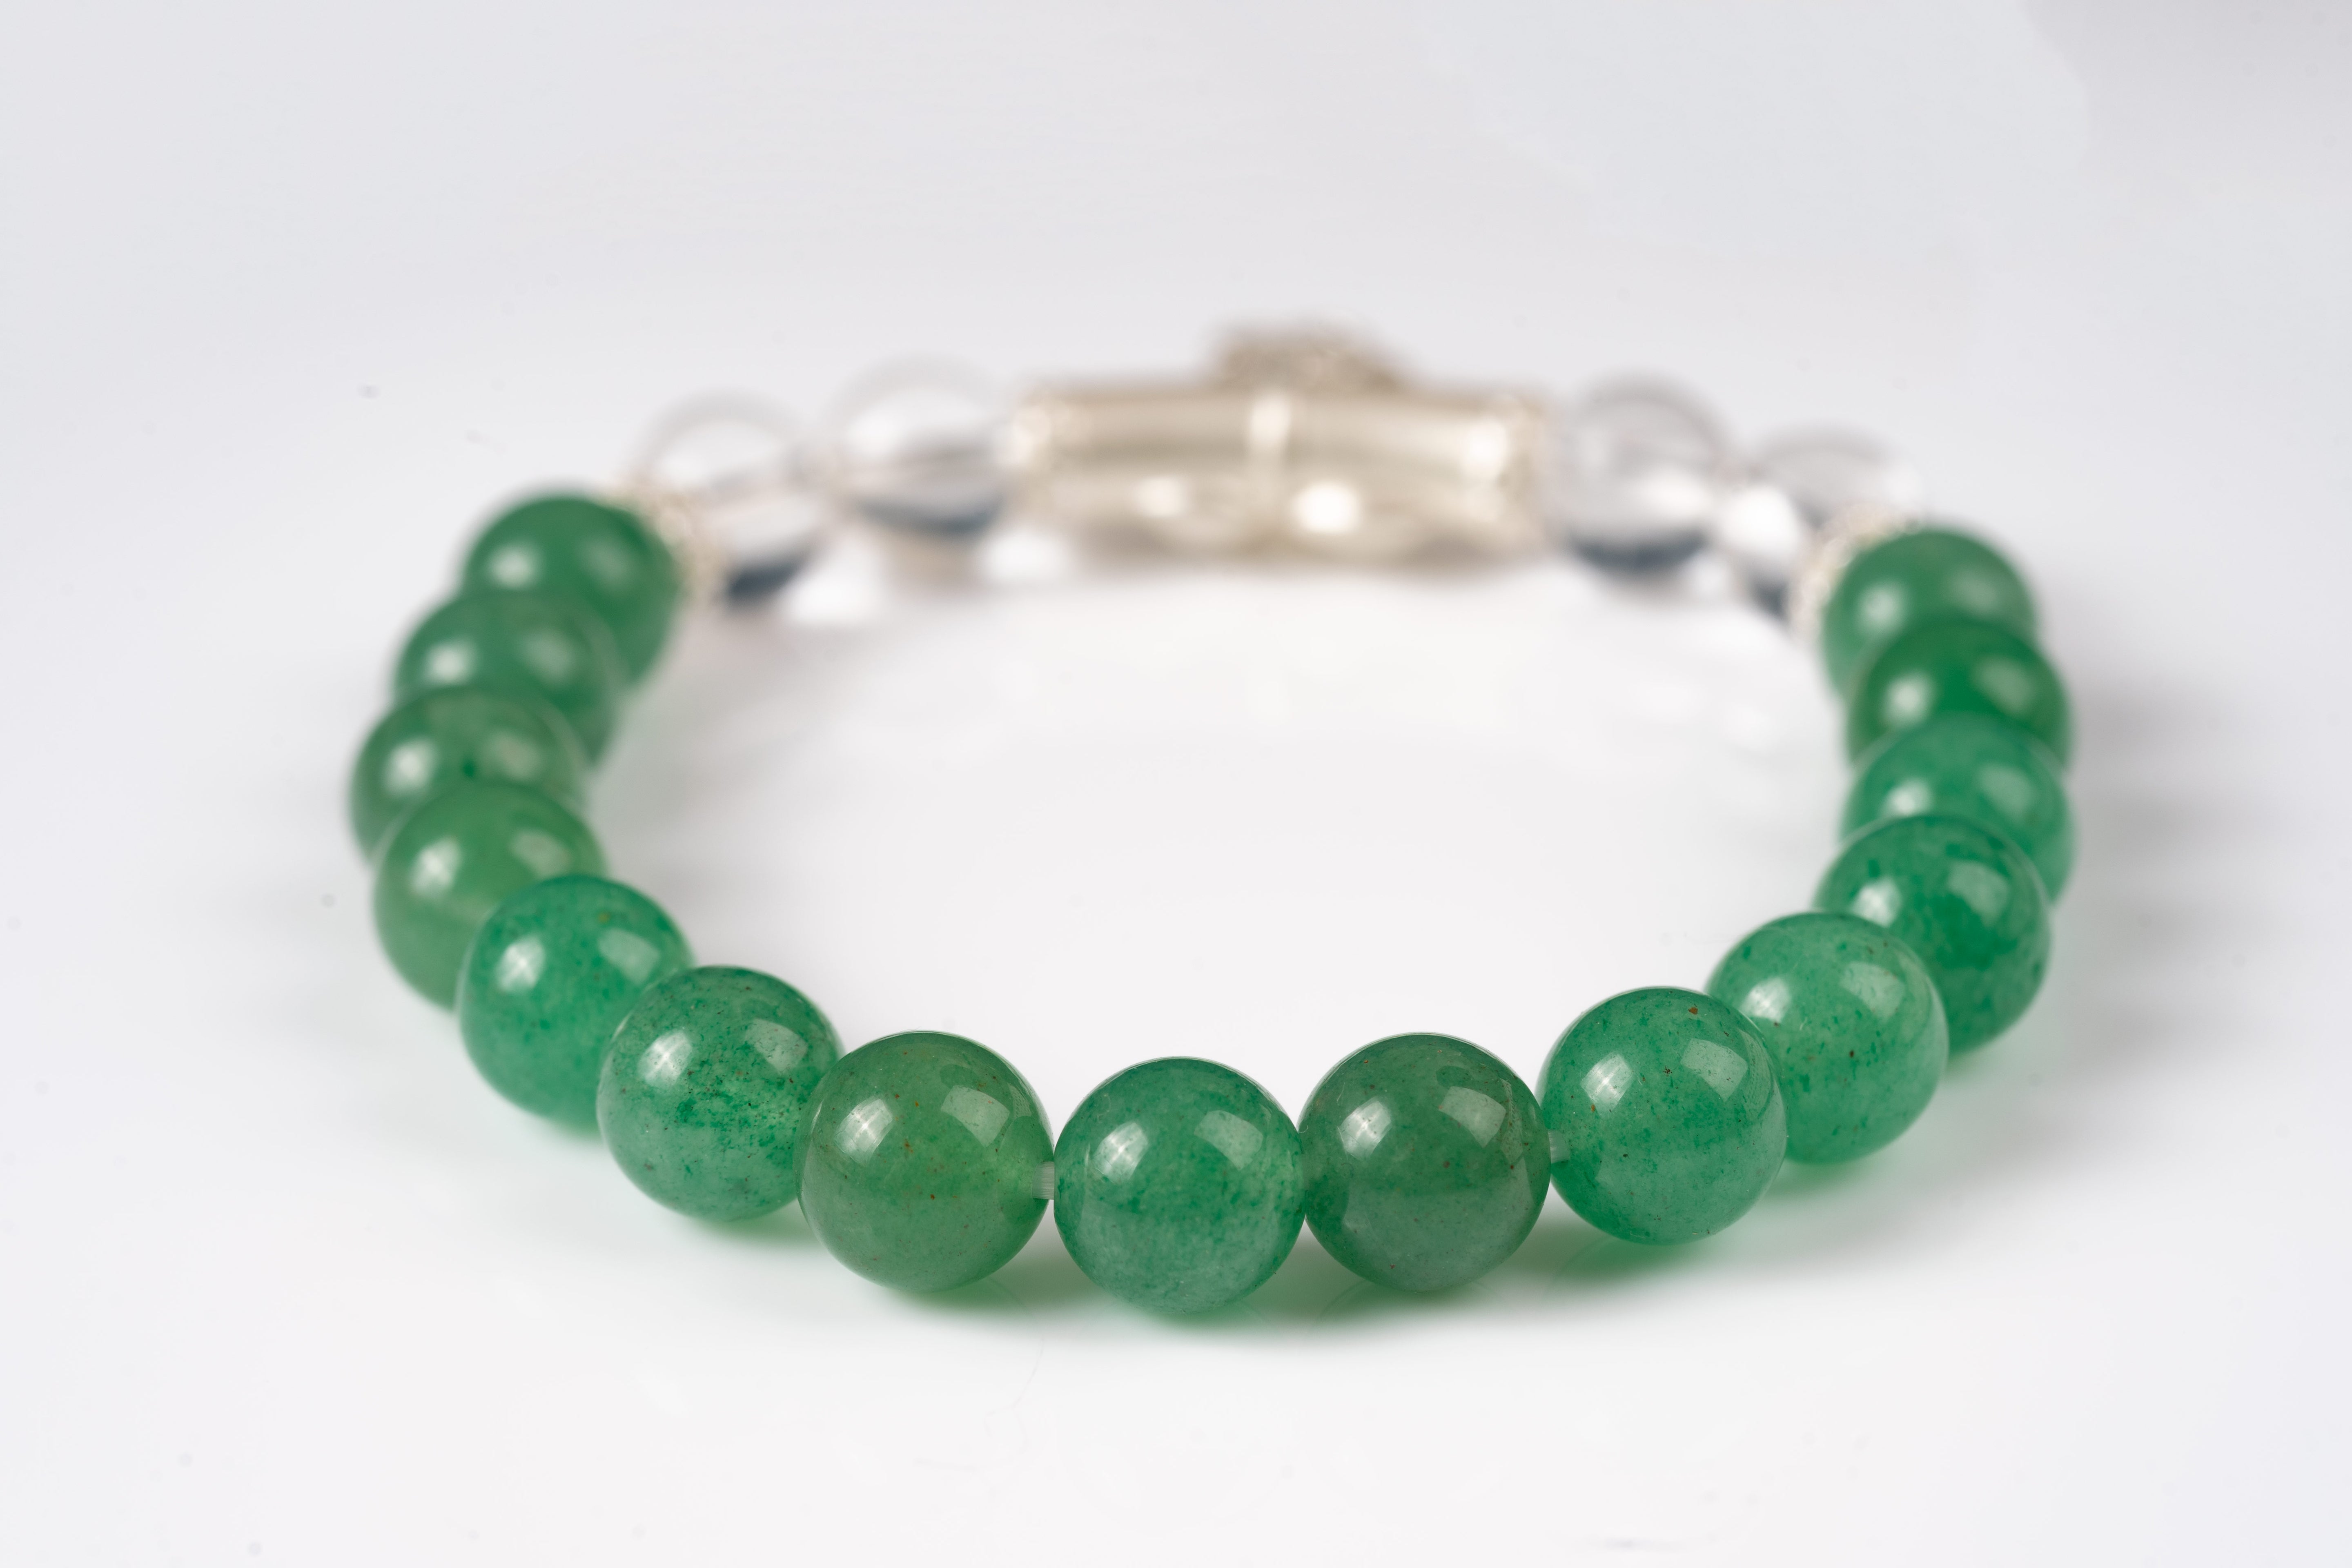 Green aventurine jade & clear quartz sterling silver bracelet